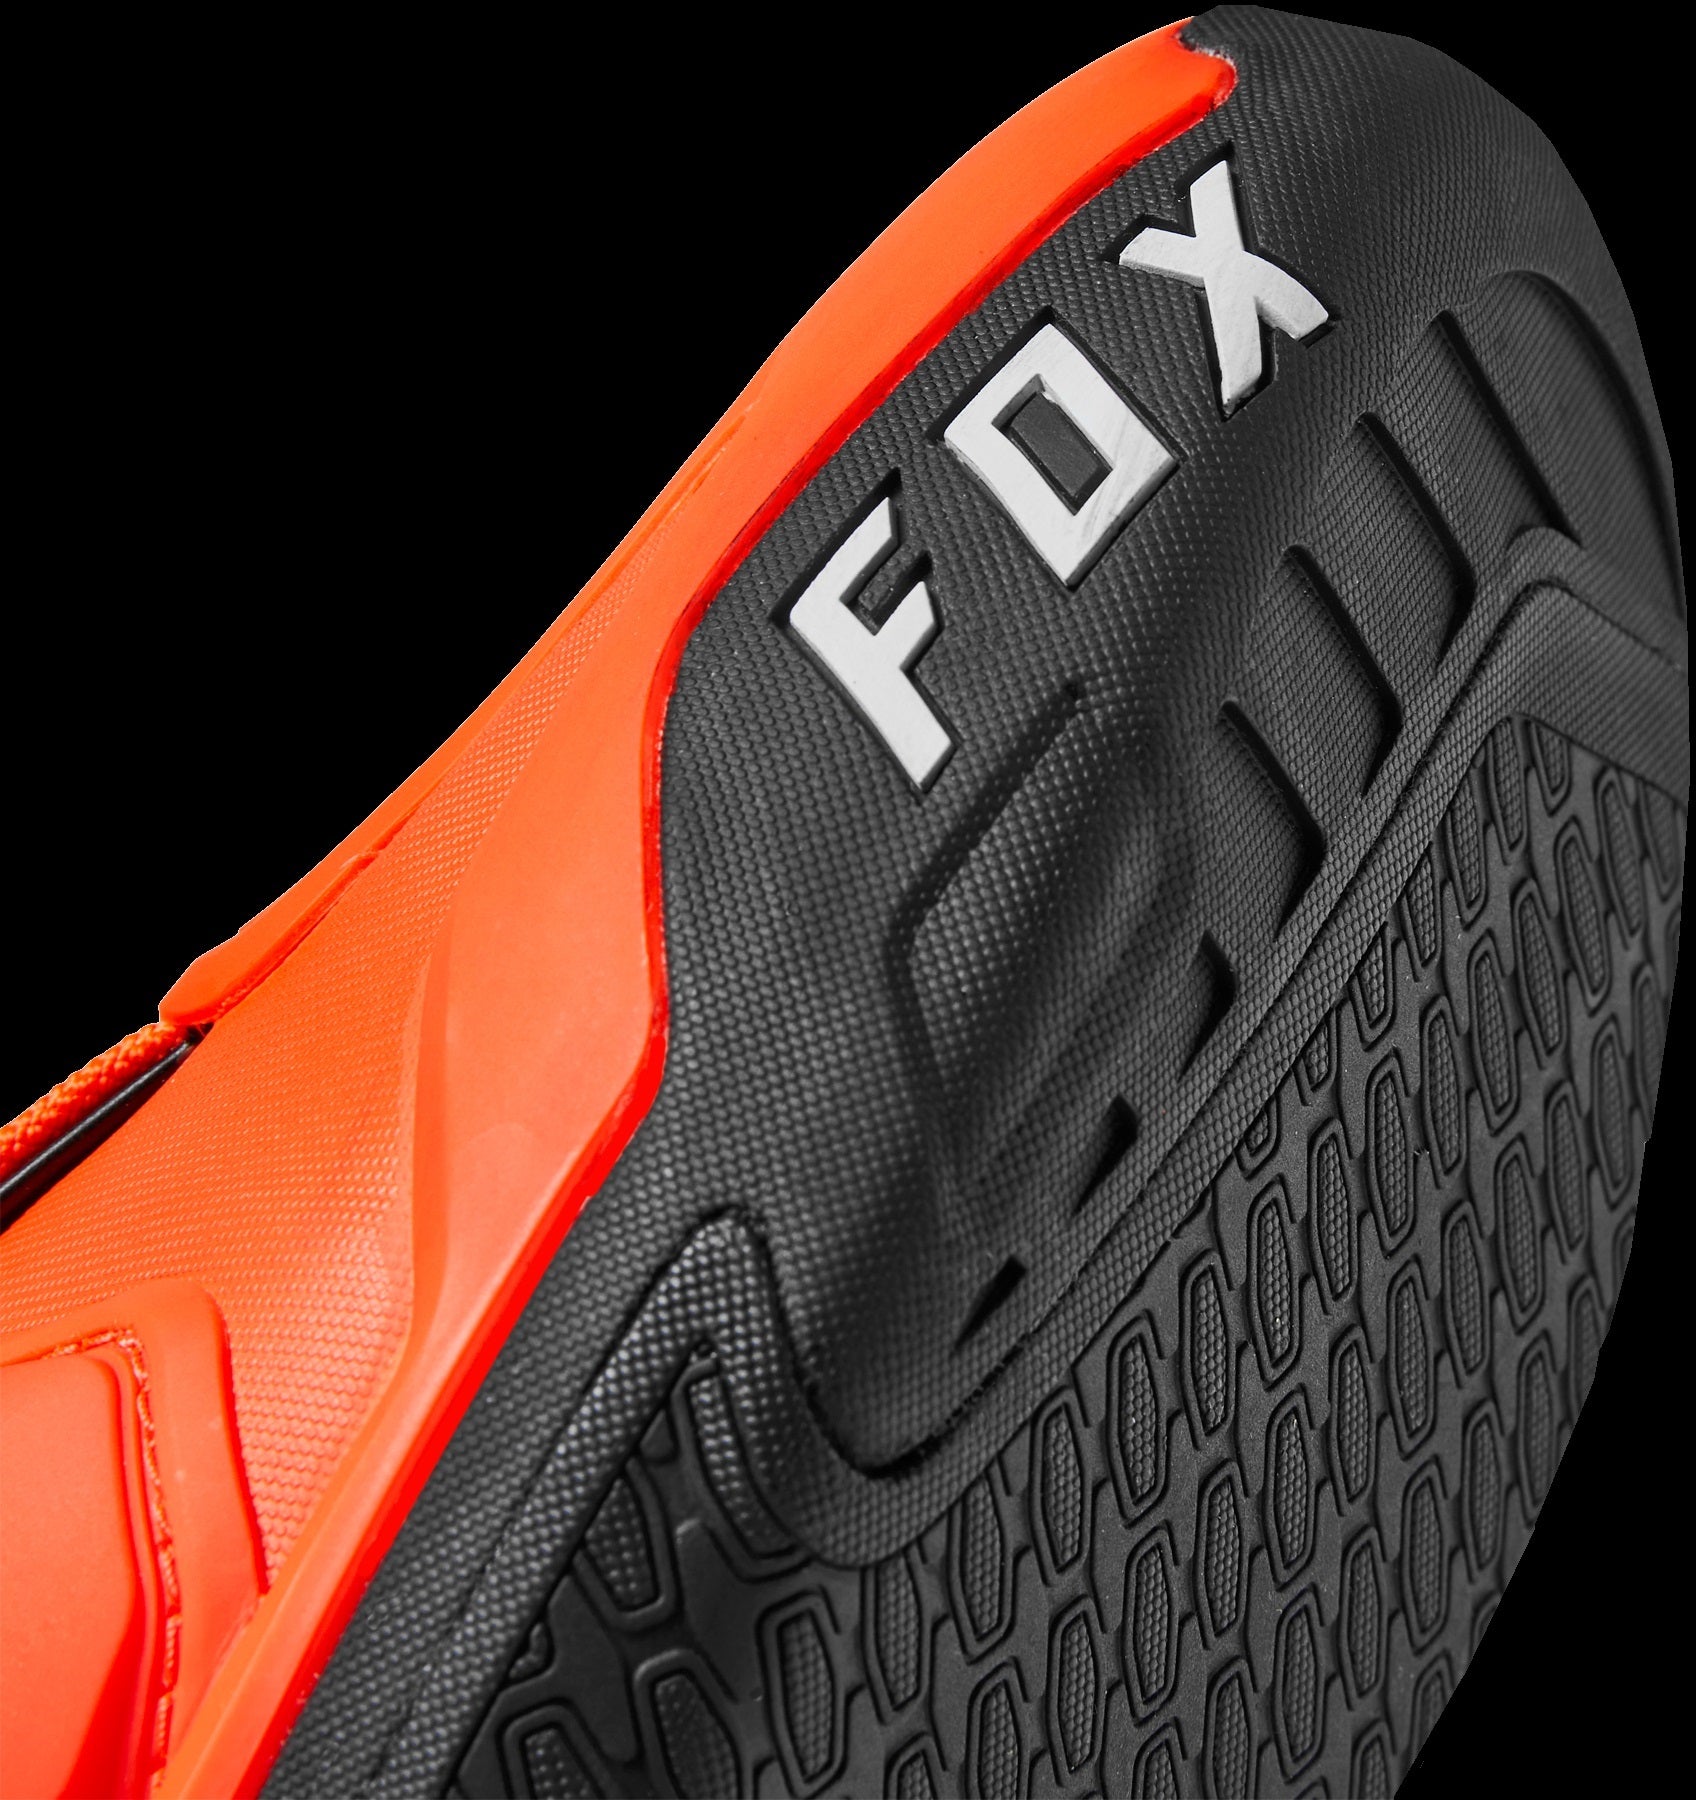 Fox Racing Instinct 2.0 Boots Adult Orange